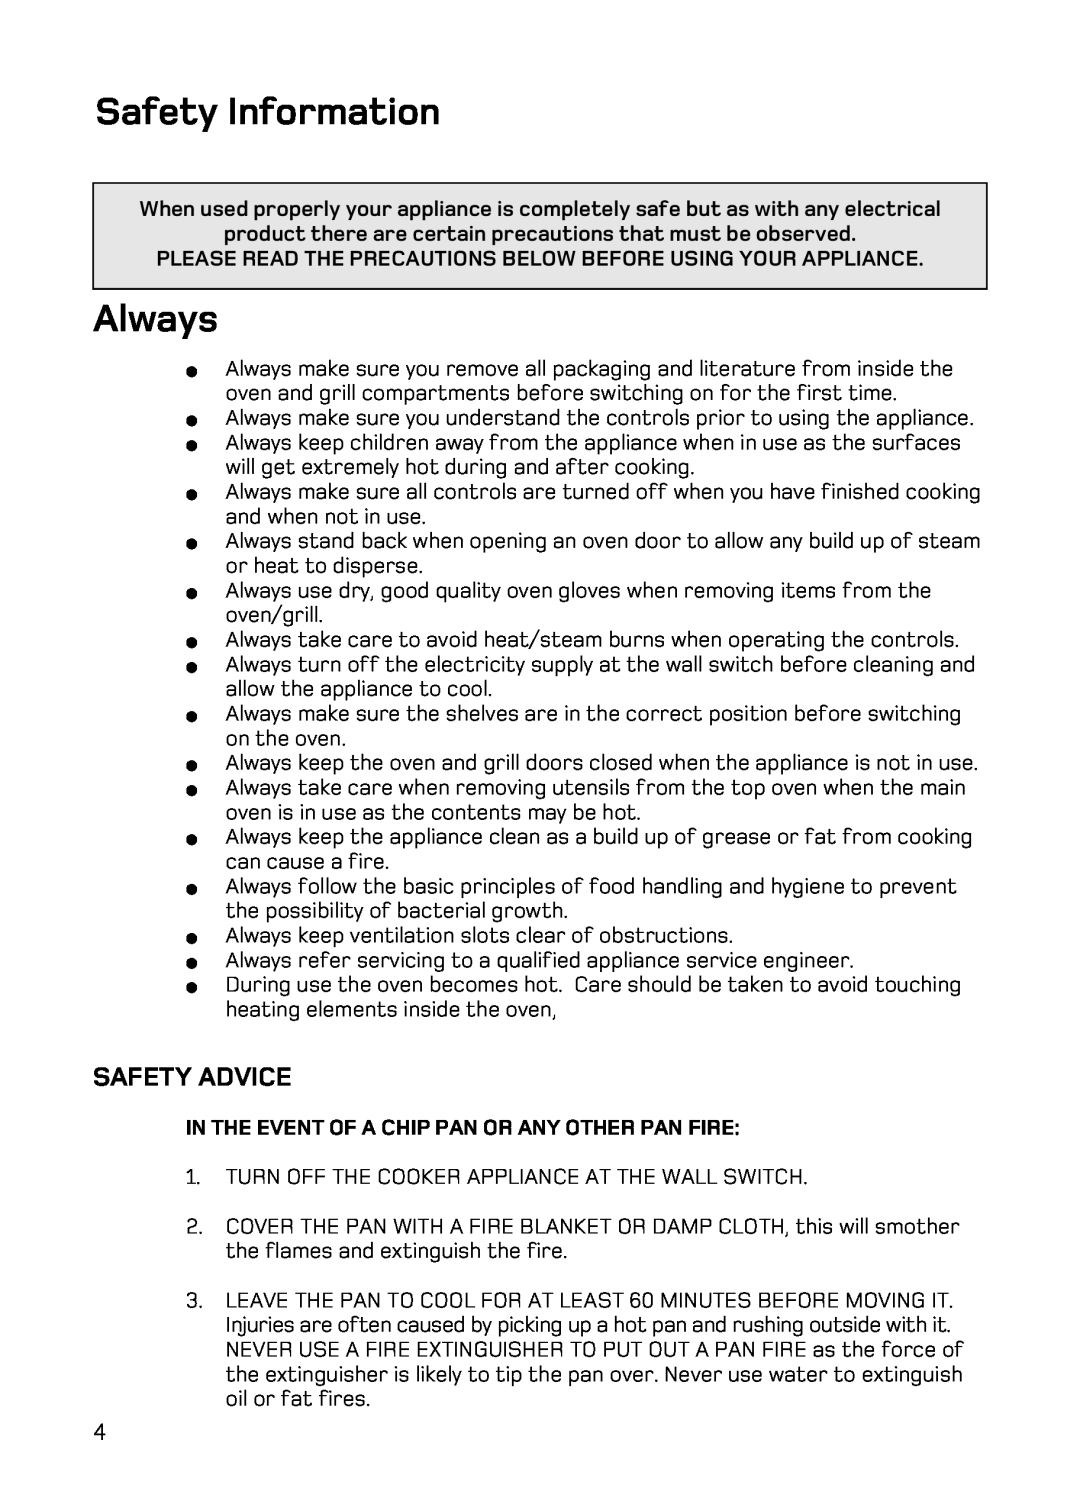 Hotpoint DE47X1, DQ47 Mk2, BD52 Mk2, BD62 Mk2 manual Safety Information, Always, Safety Advice 